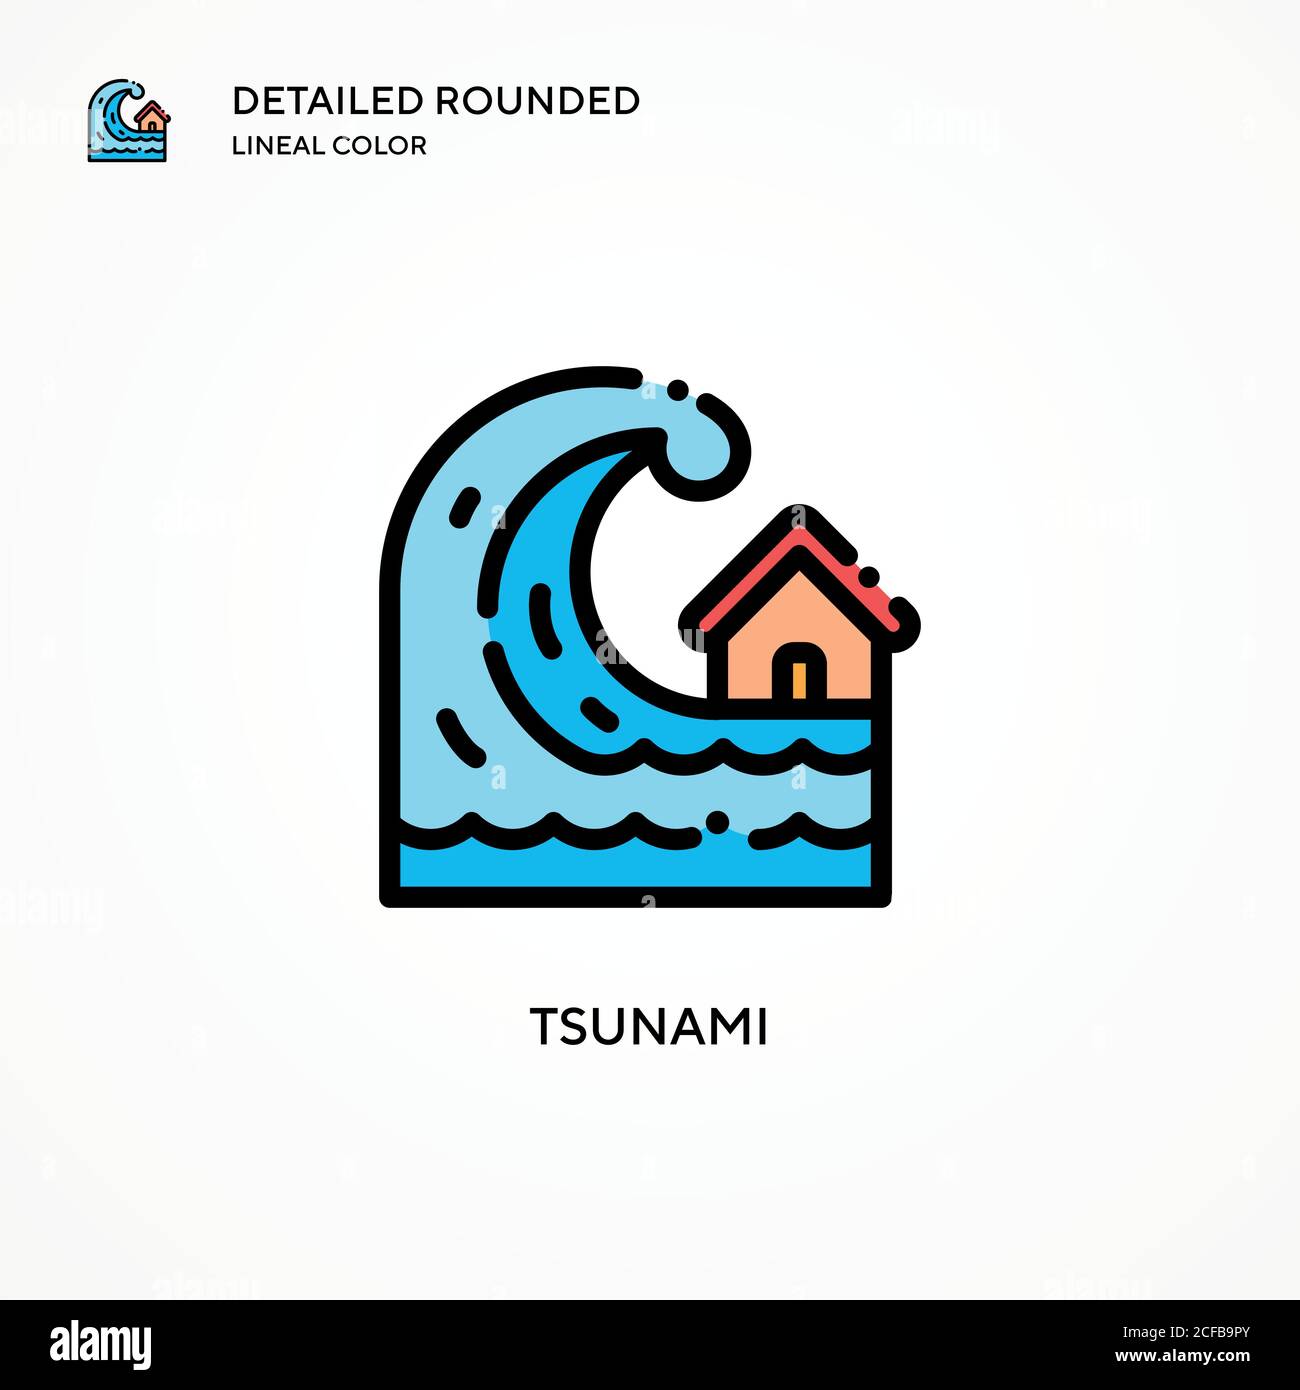 Tsunami vector icon. Modern vector illustration concepts. Easy to edit and customize. Stock Vector